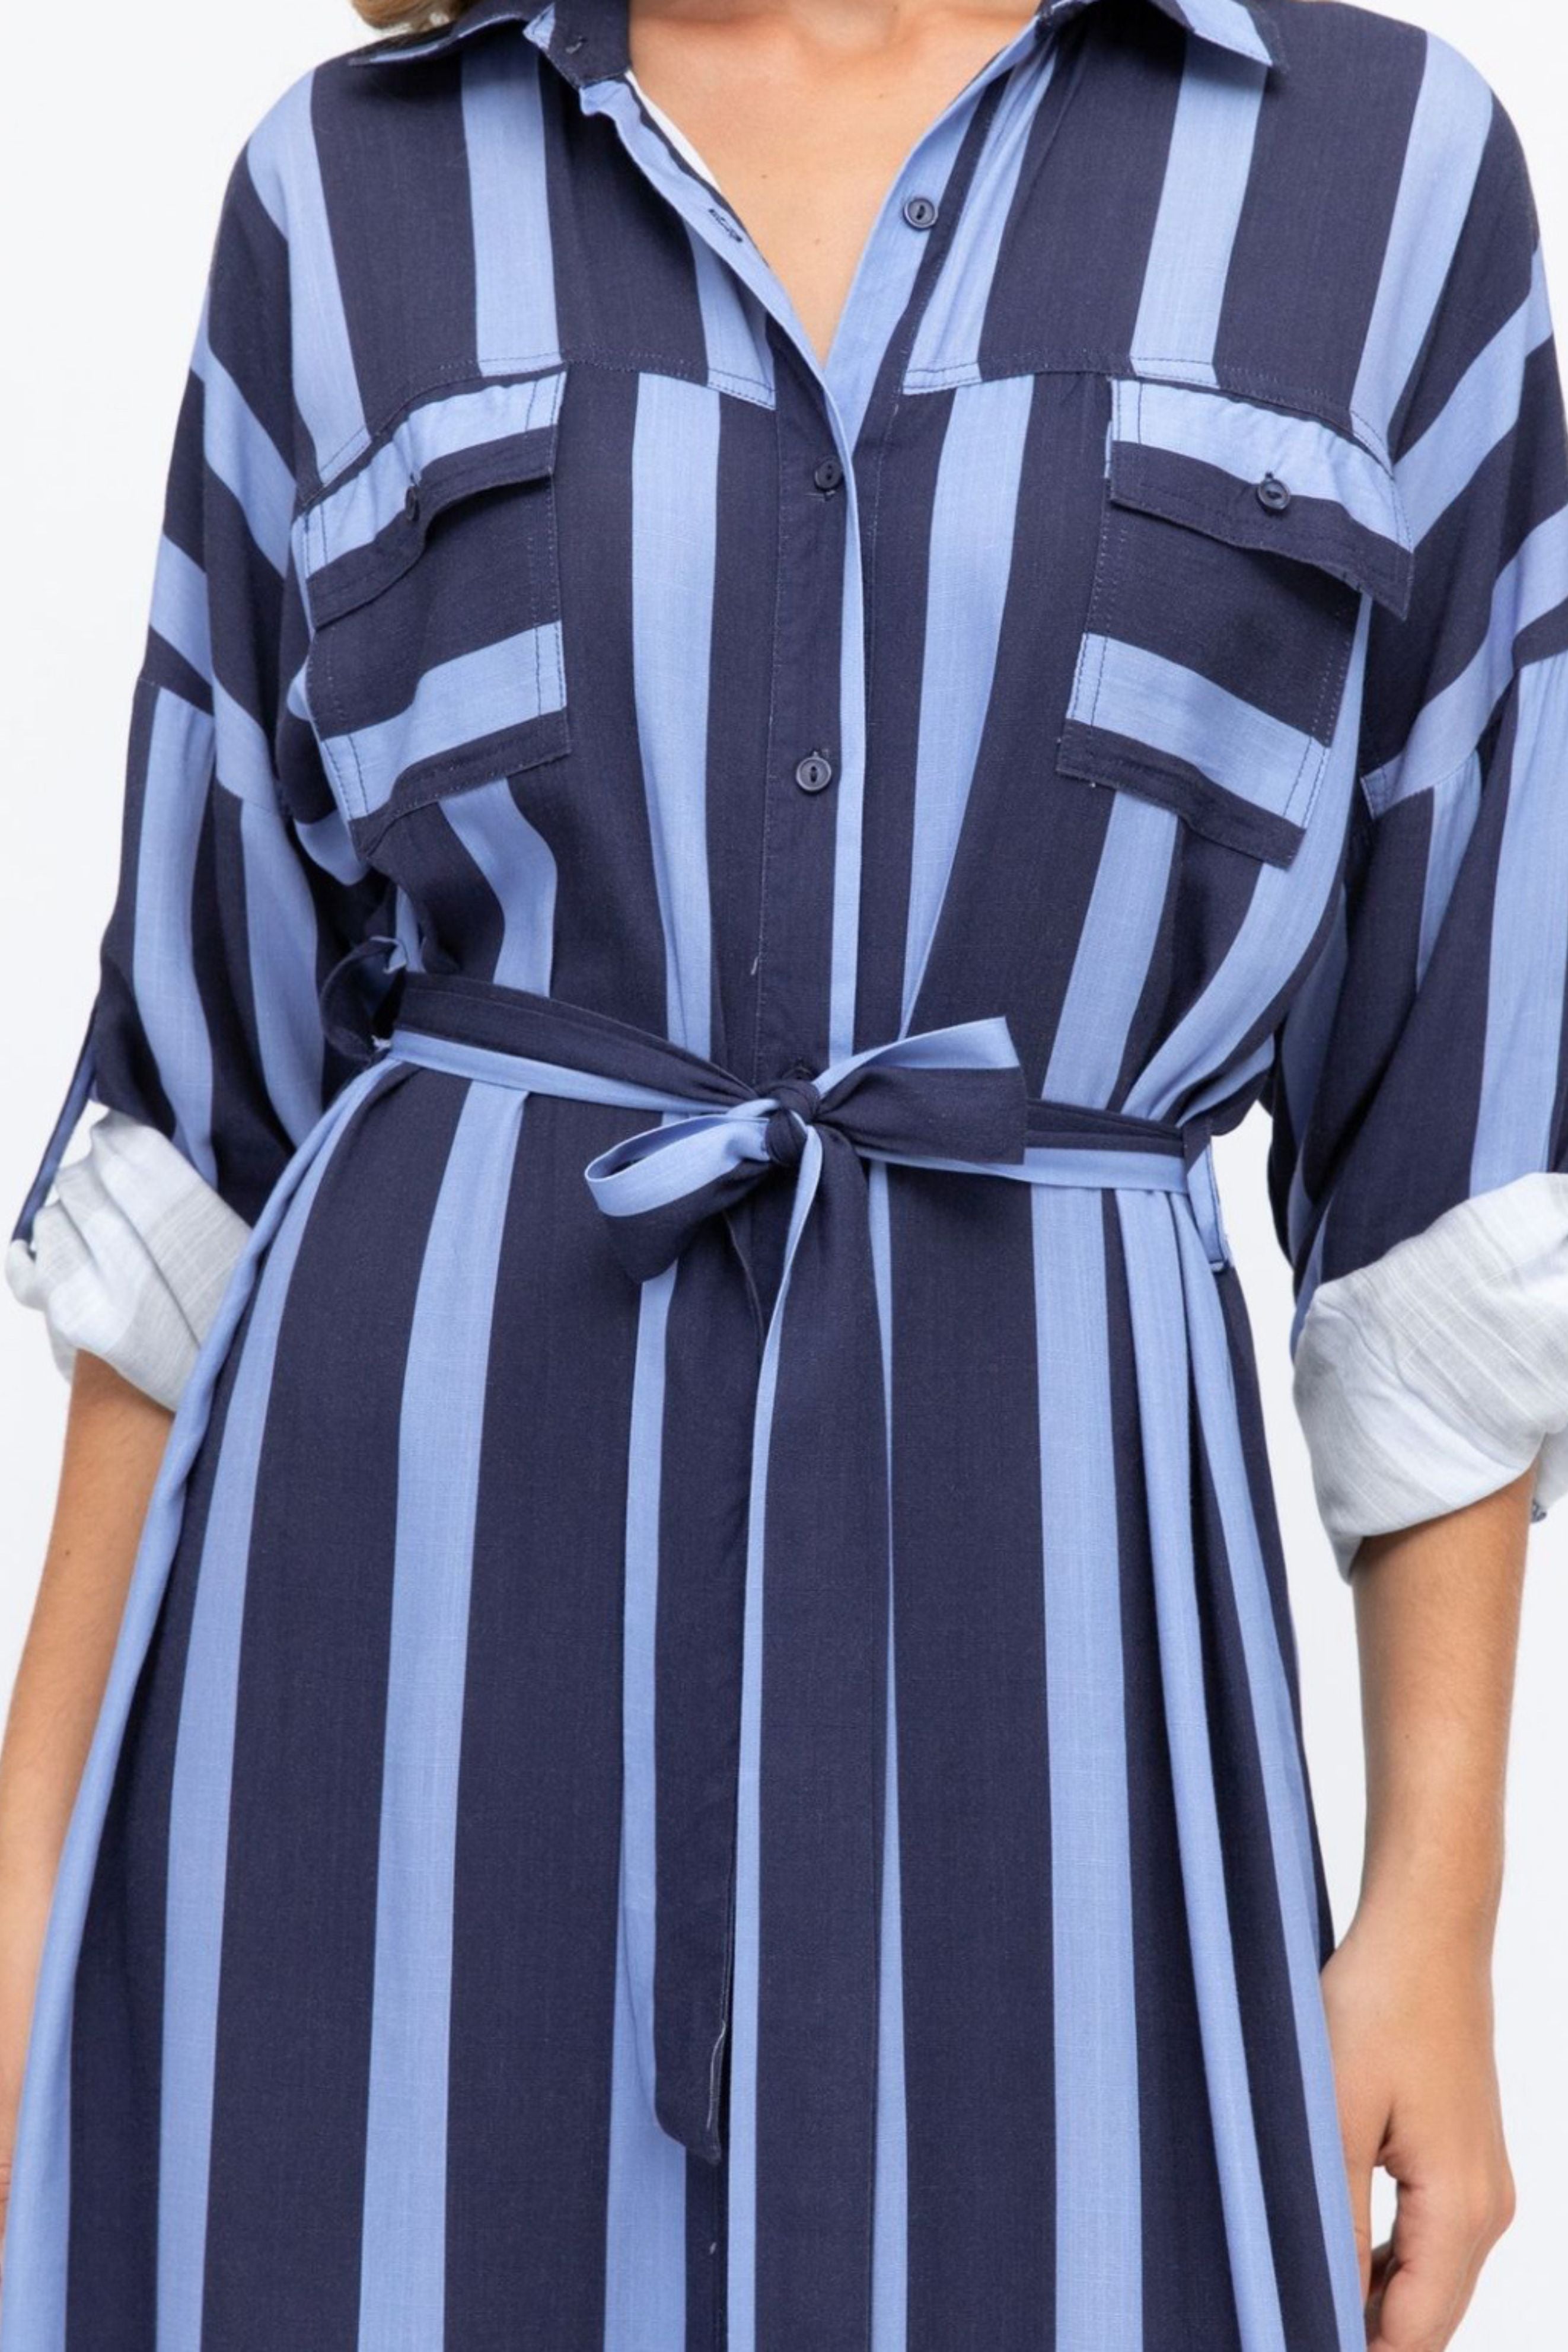 Skye Shirt Dress in Navy and Blue Stripe